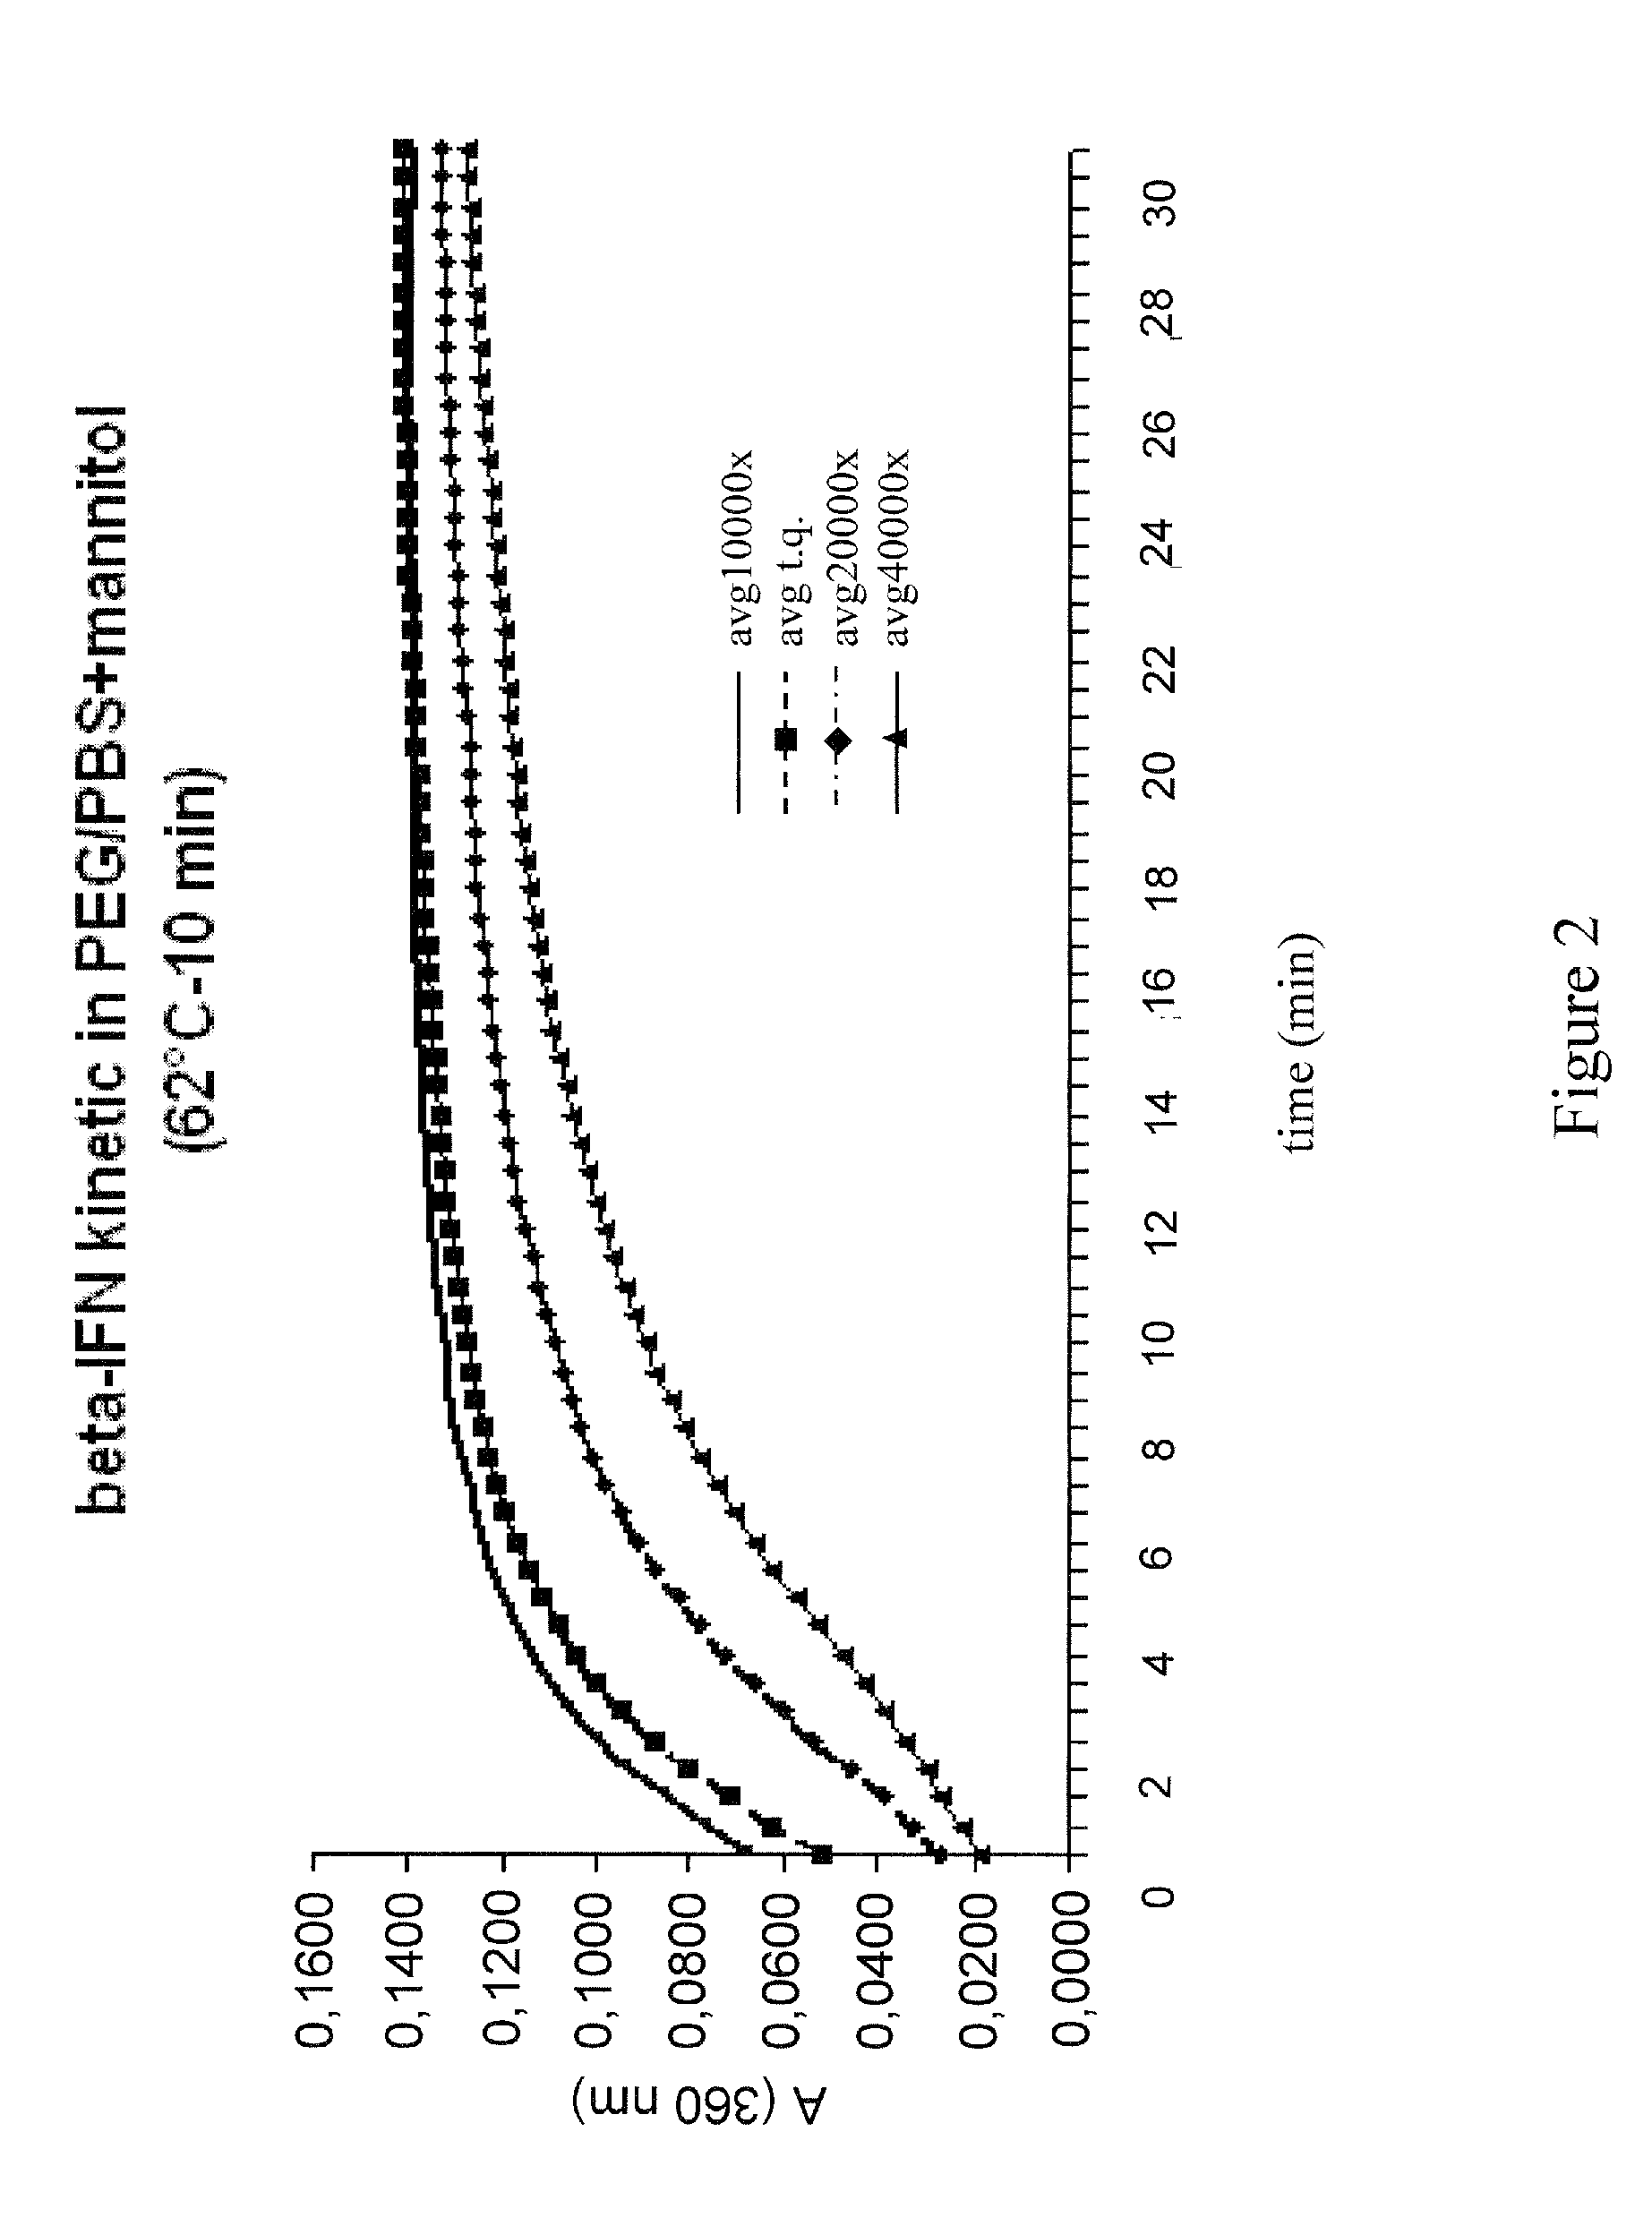 Stabilized interferon liquid formulations